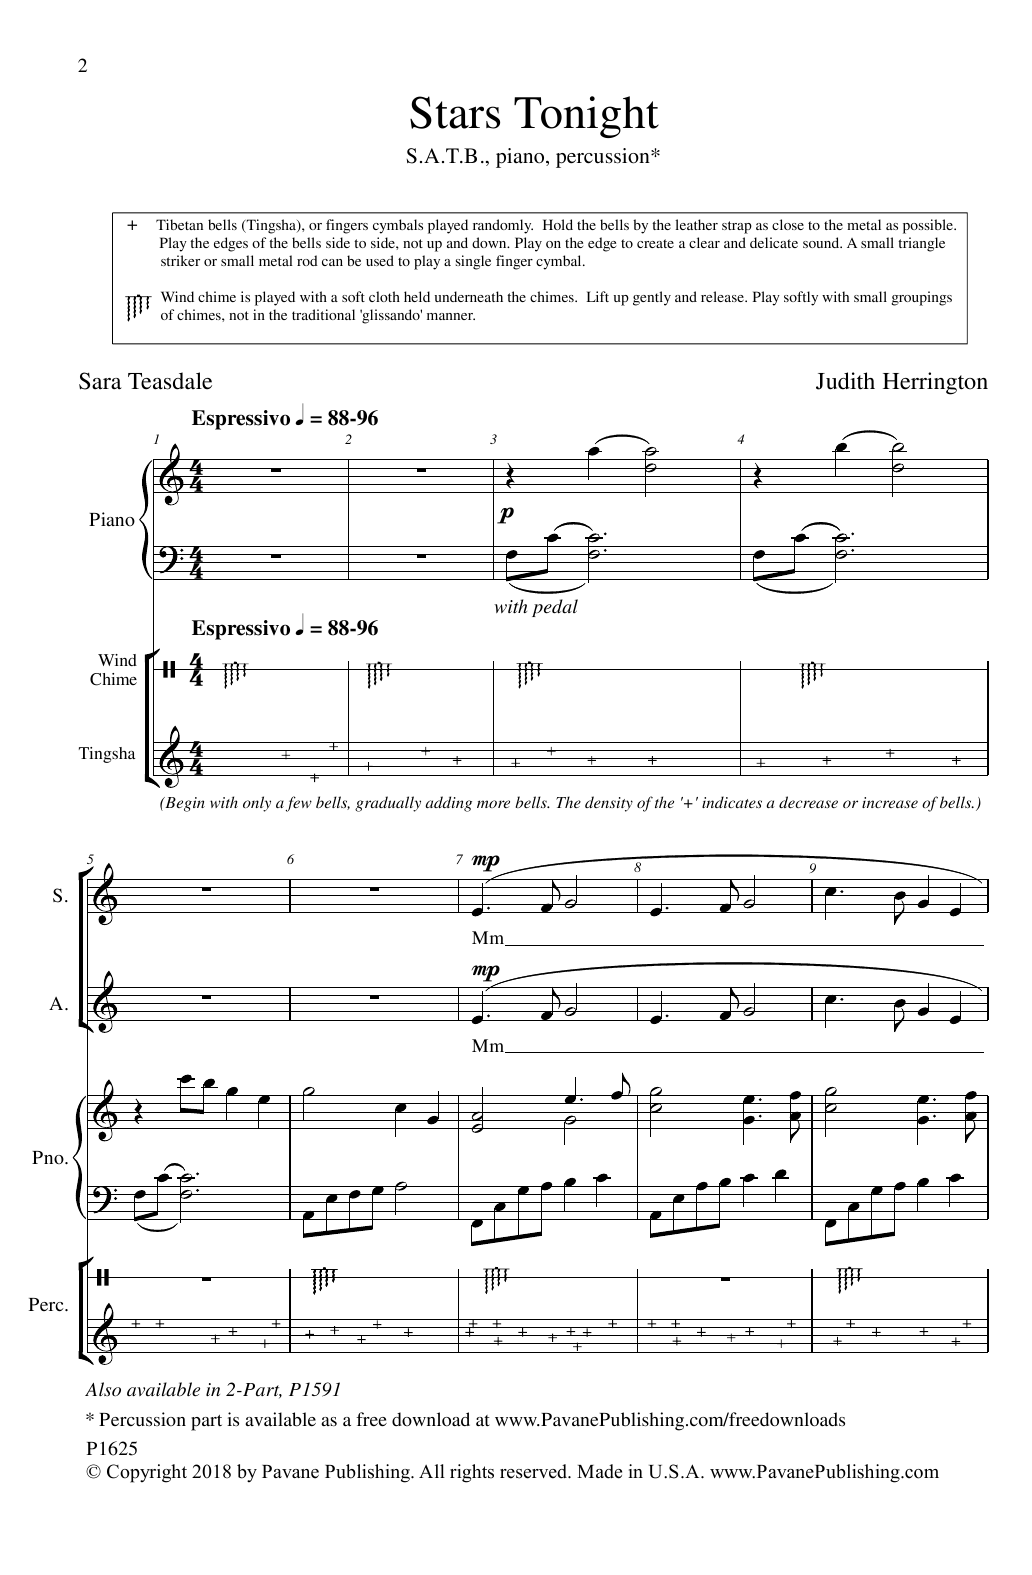 Judith Herrington Stars Tonight Sheet Music Notes & Chords for 2-Part Choir - Download or Print PDF